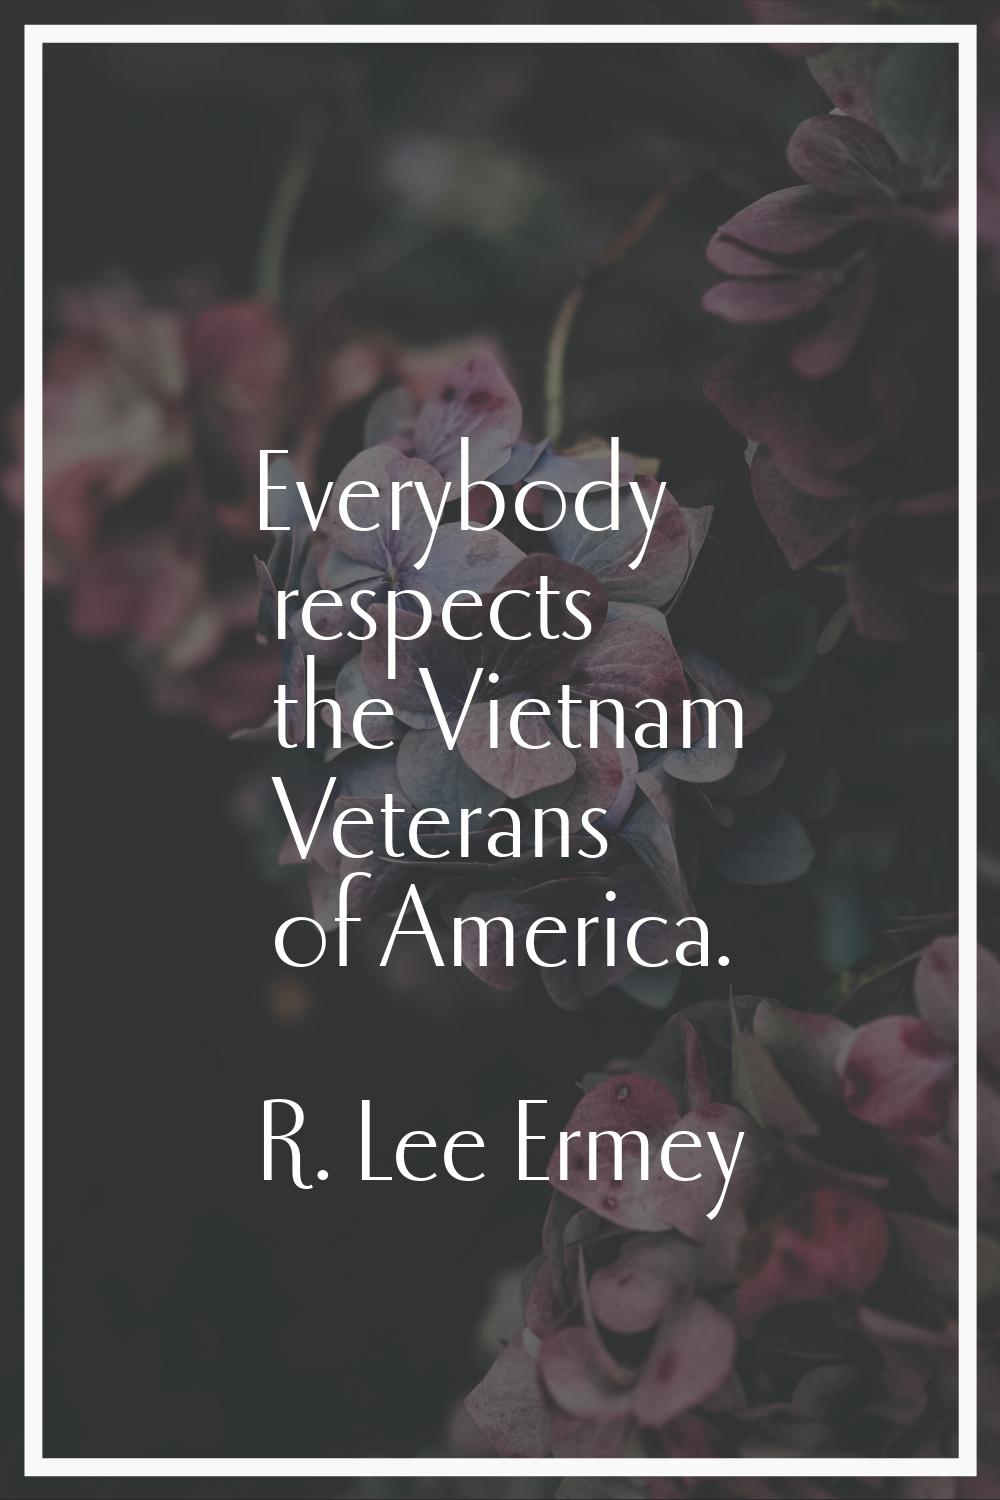 Everybody respects the Vietnam Veterans of America.